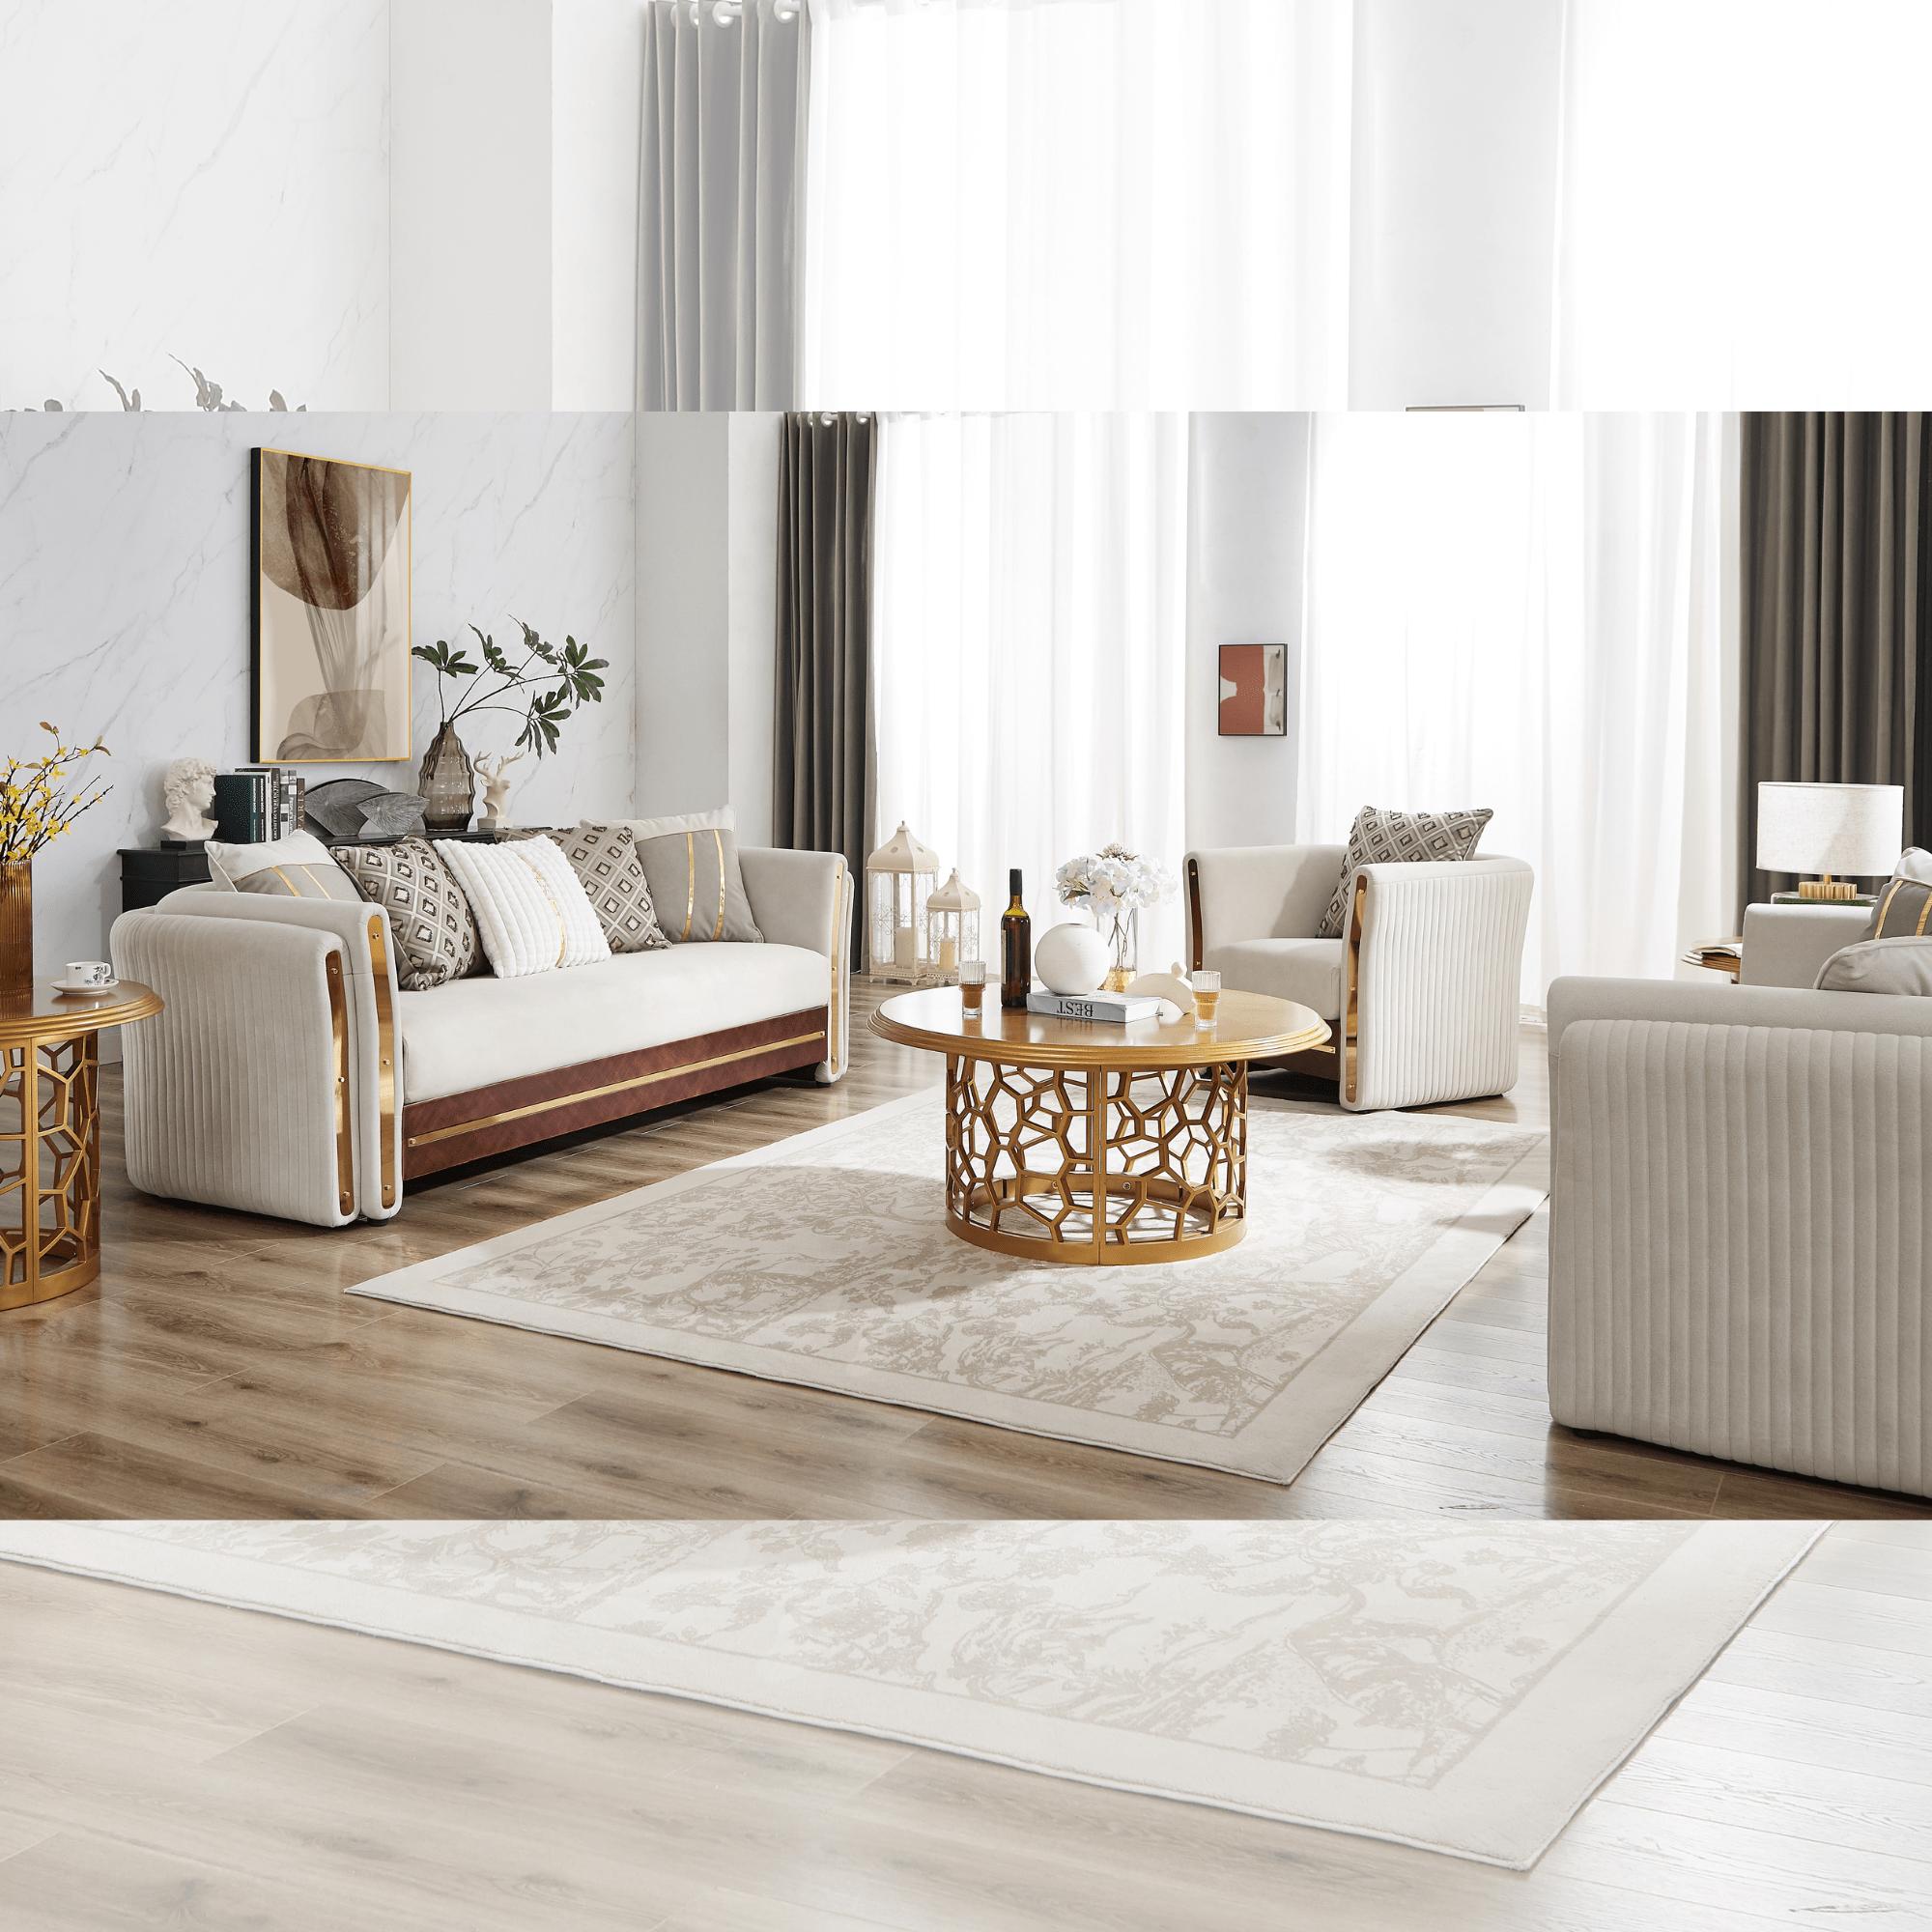 

    
Homey Design Furniture HD-9035 Sofa HD-S9035 Sofa White/Gold HD-S9035
